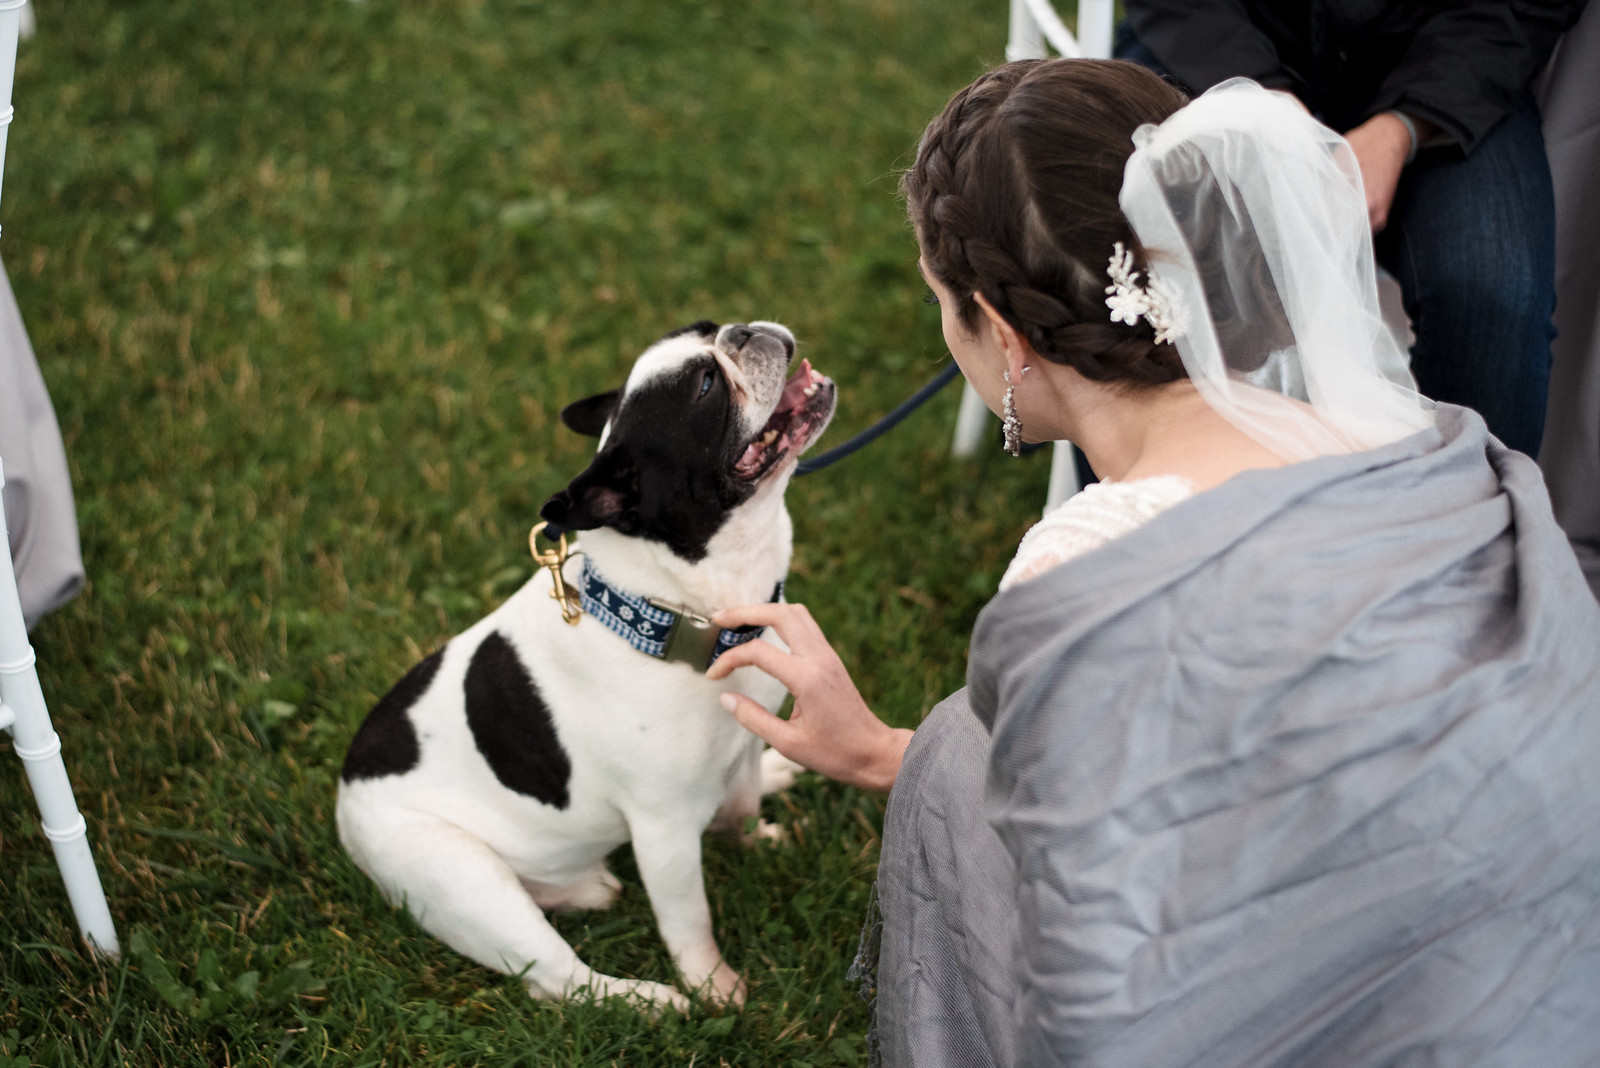 Dogs at weddings are always a good idea on juliettelauraphotography.blogspot.com